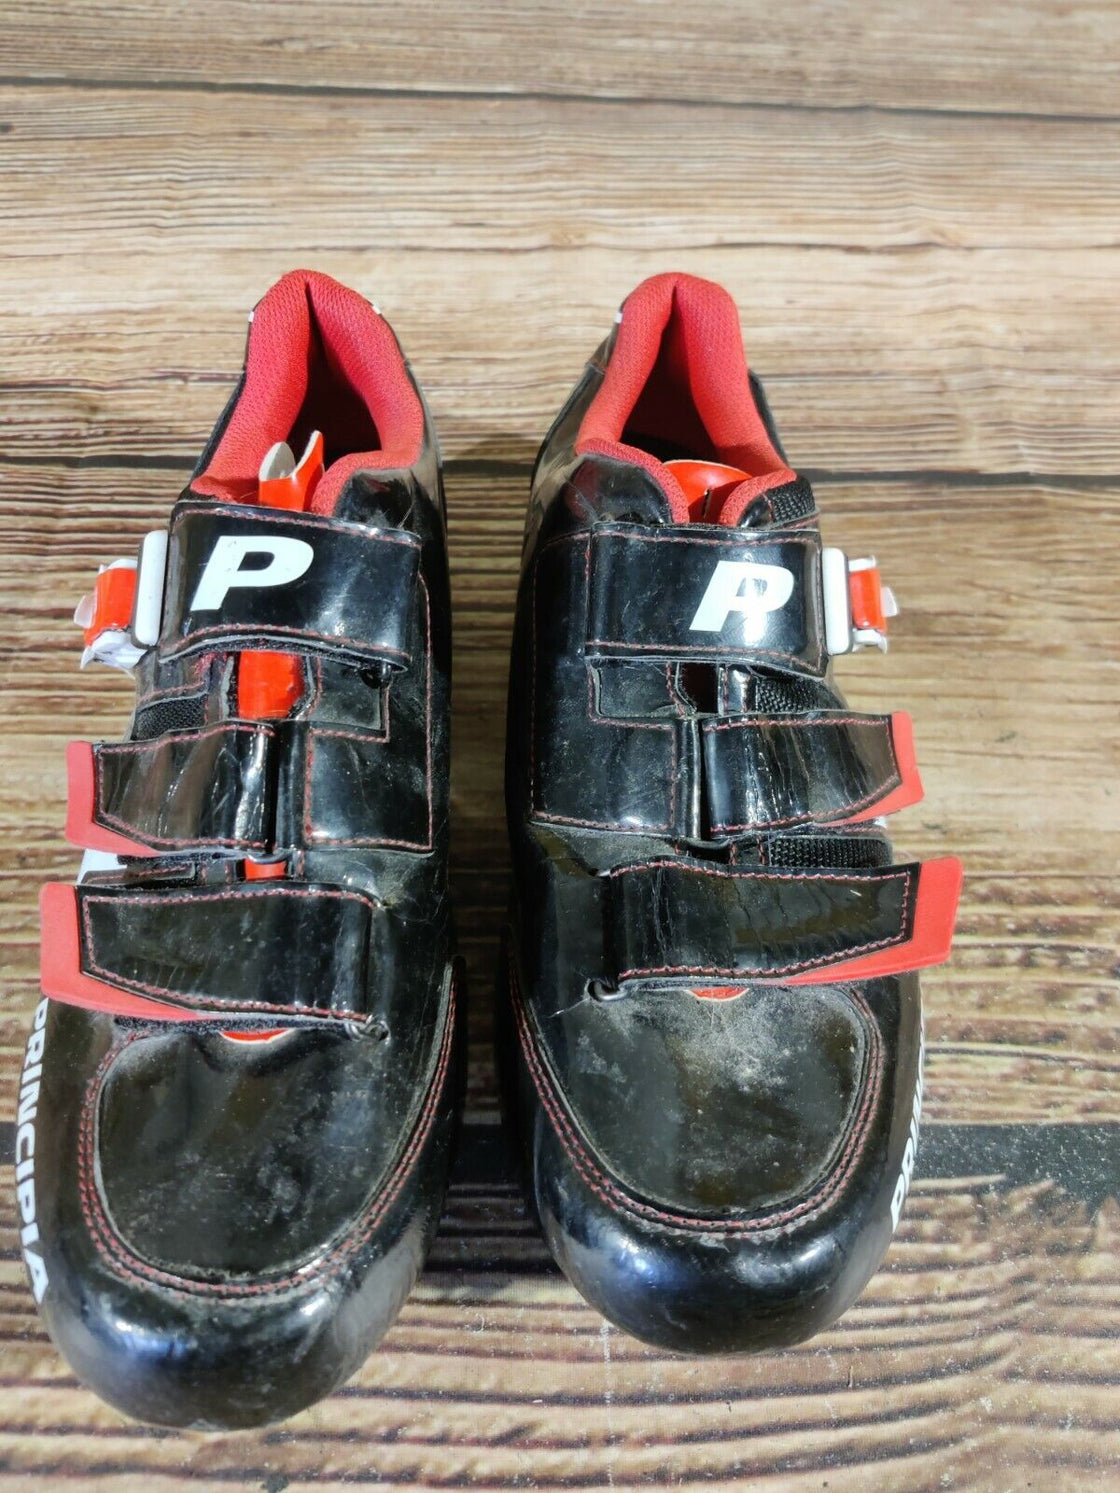 PRINCIPIA Road Cycling Shoes Biking Boots 3 Bolts Size EU43, US9